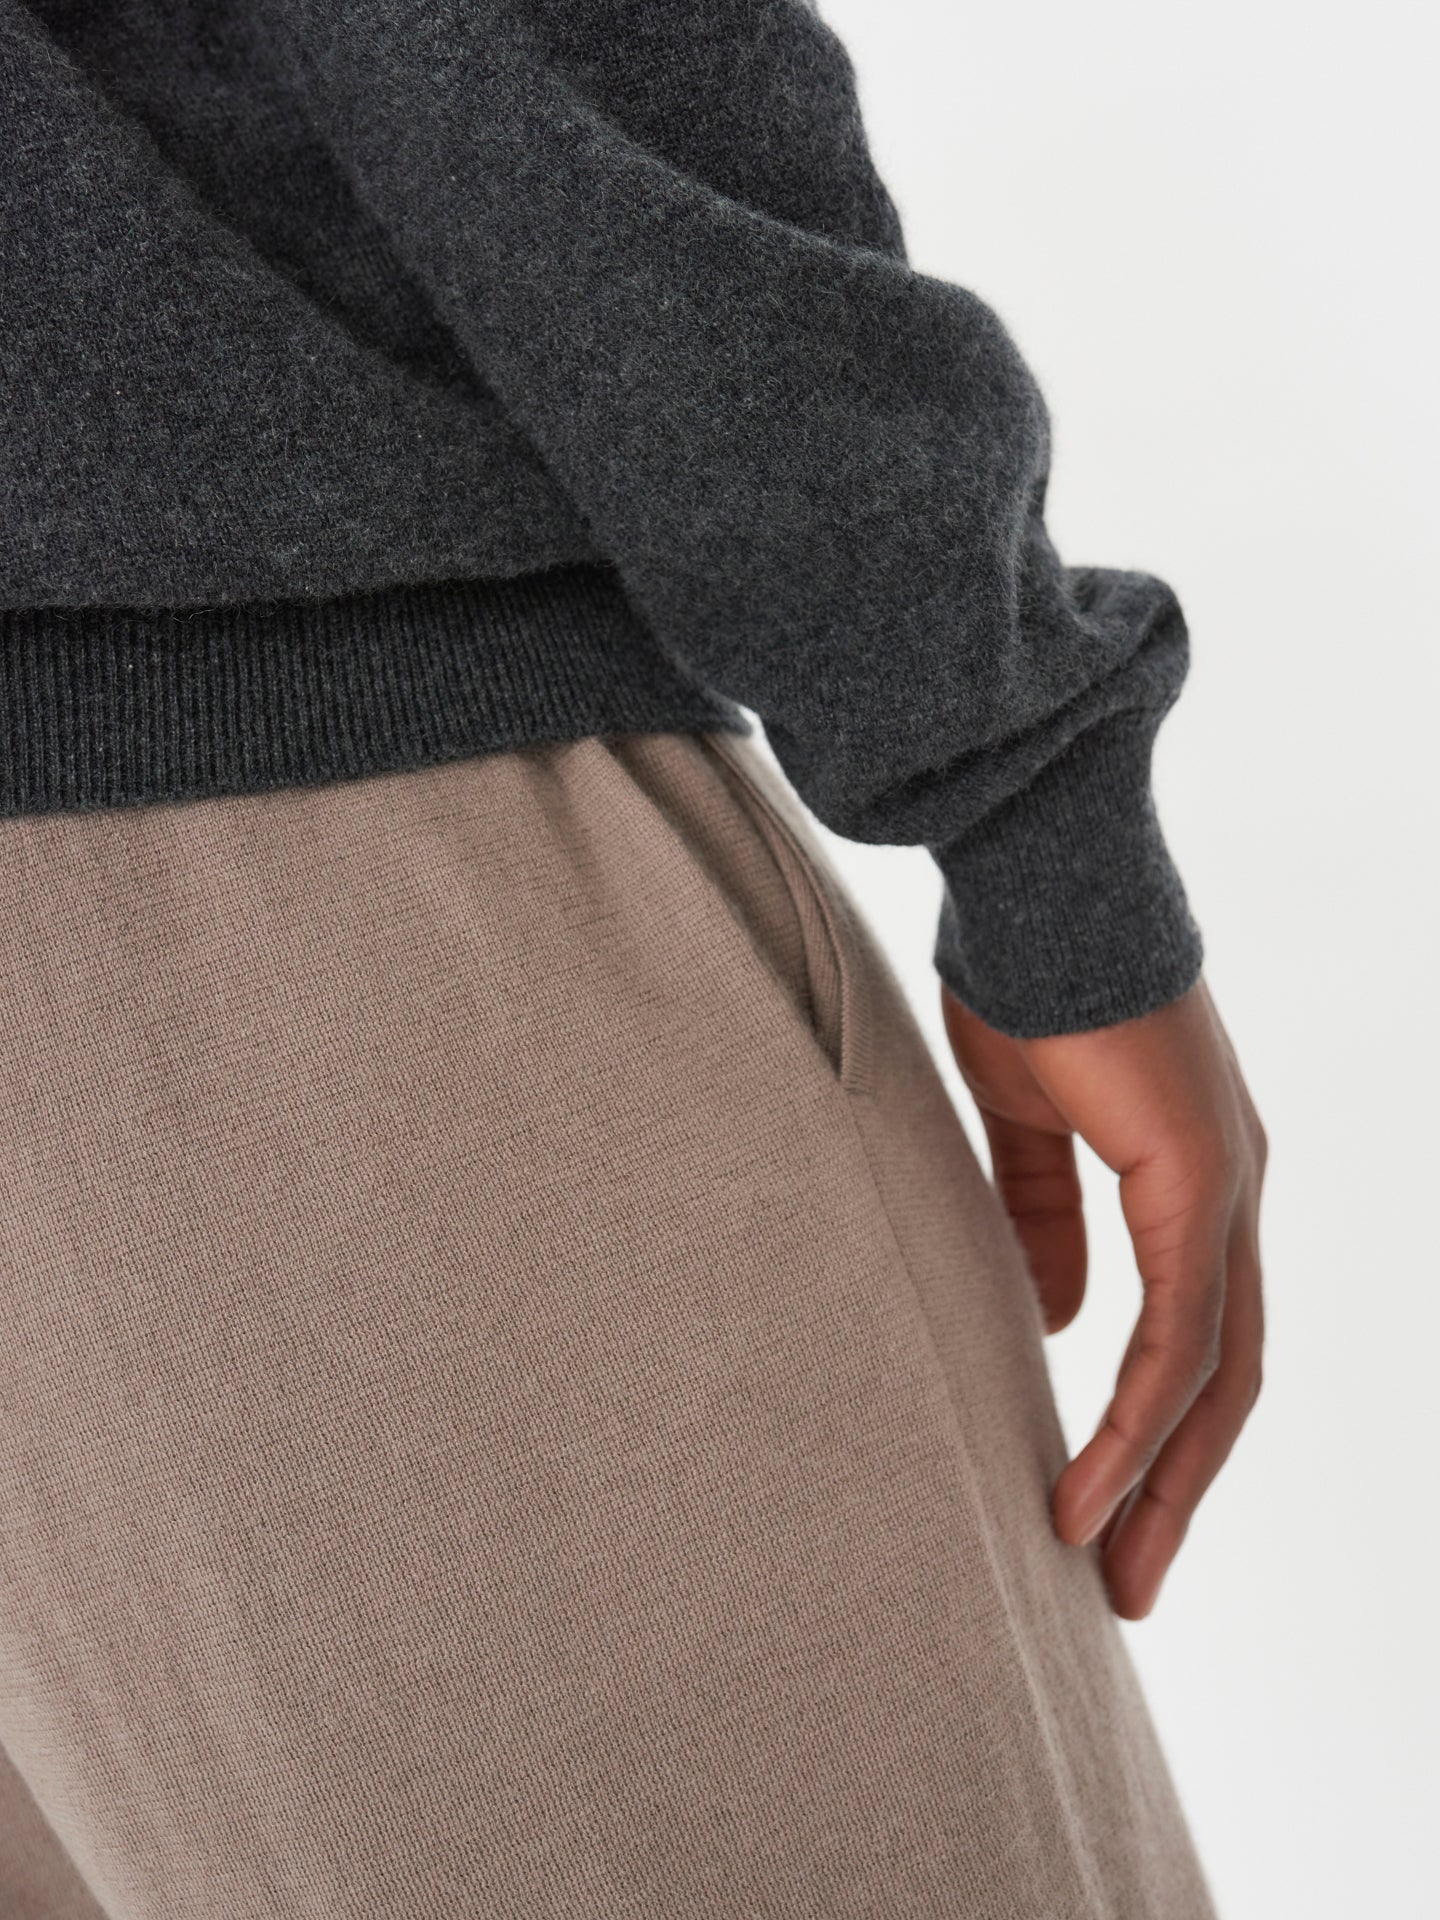 Men's Cashmere Basic Turtleneck Sweater Charcaol - Gobi Cashmere